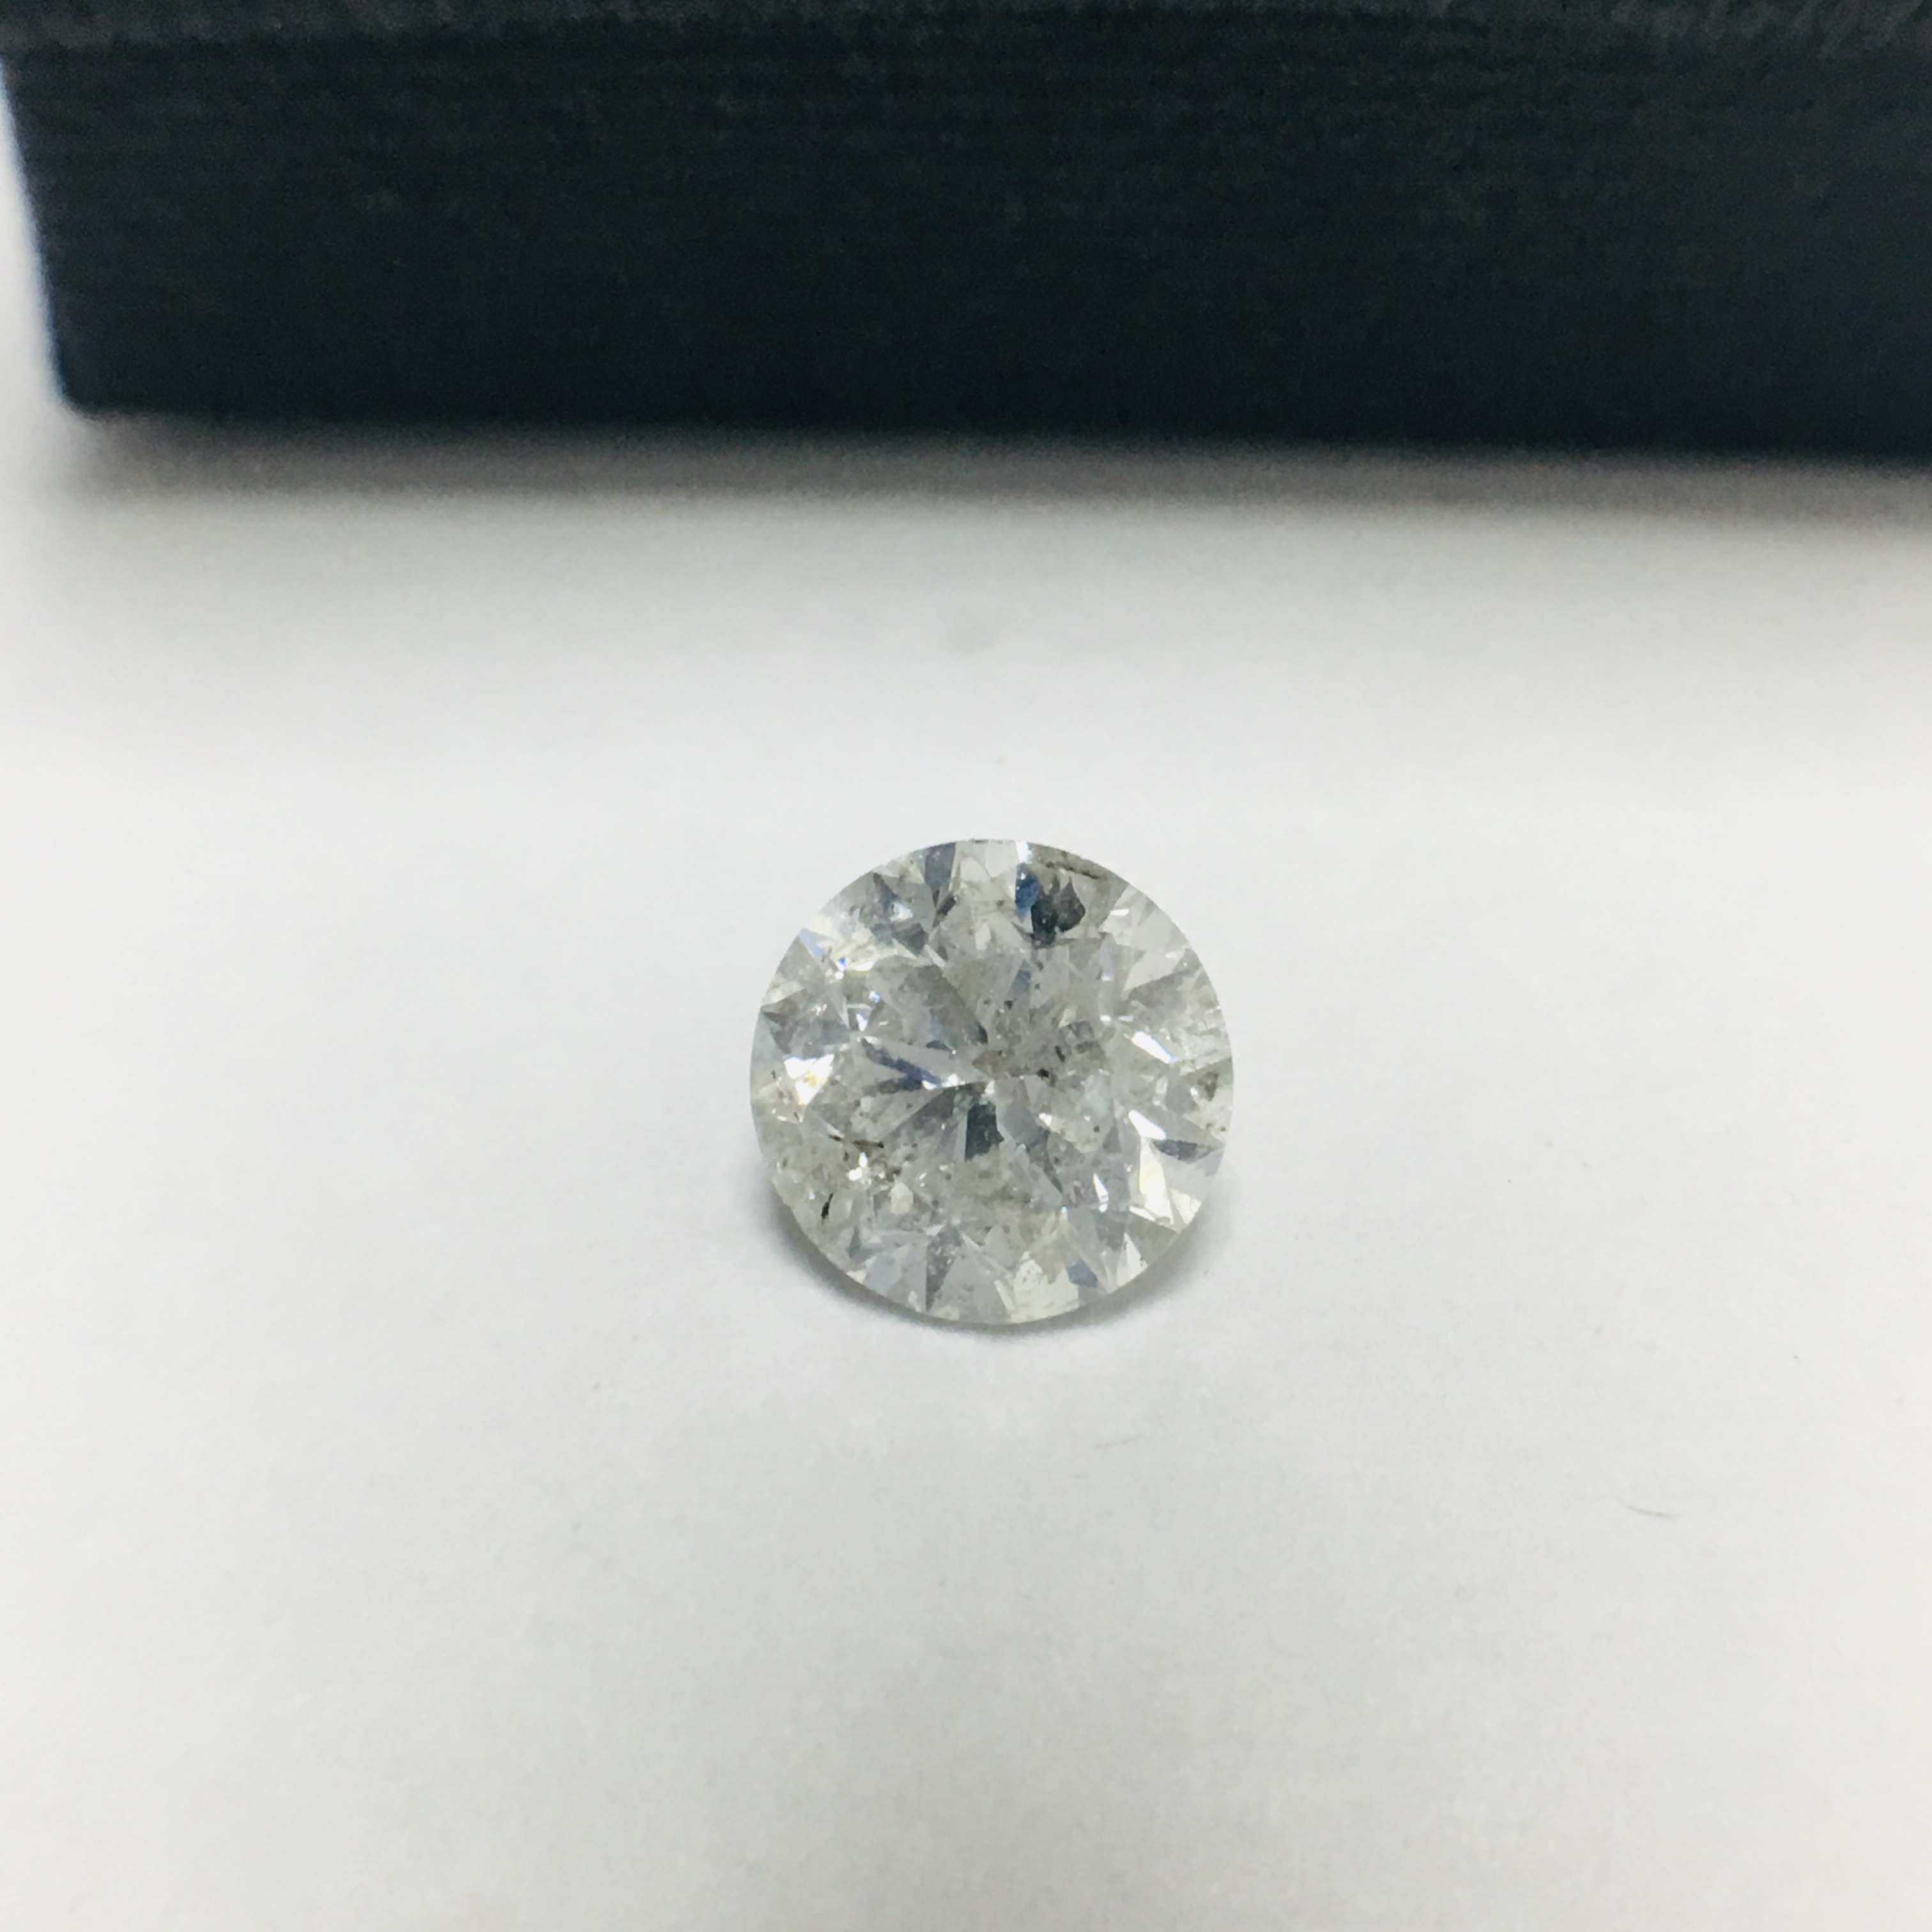 1.80ct Natural Brilliant cut diamond,H colour,si3 clarity,no treatment - Image 3 of 3